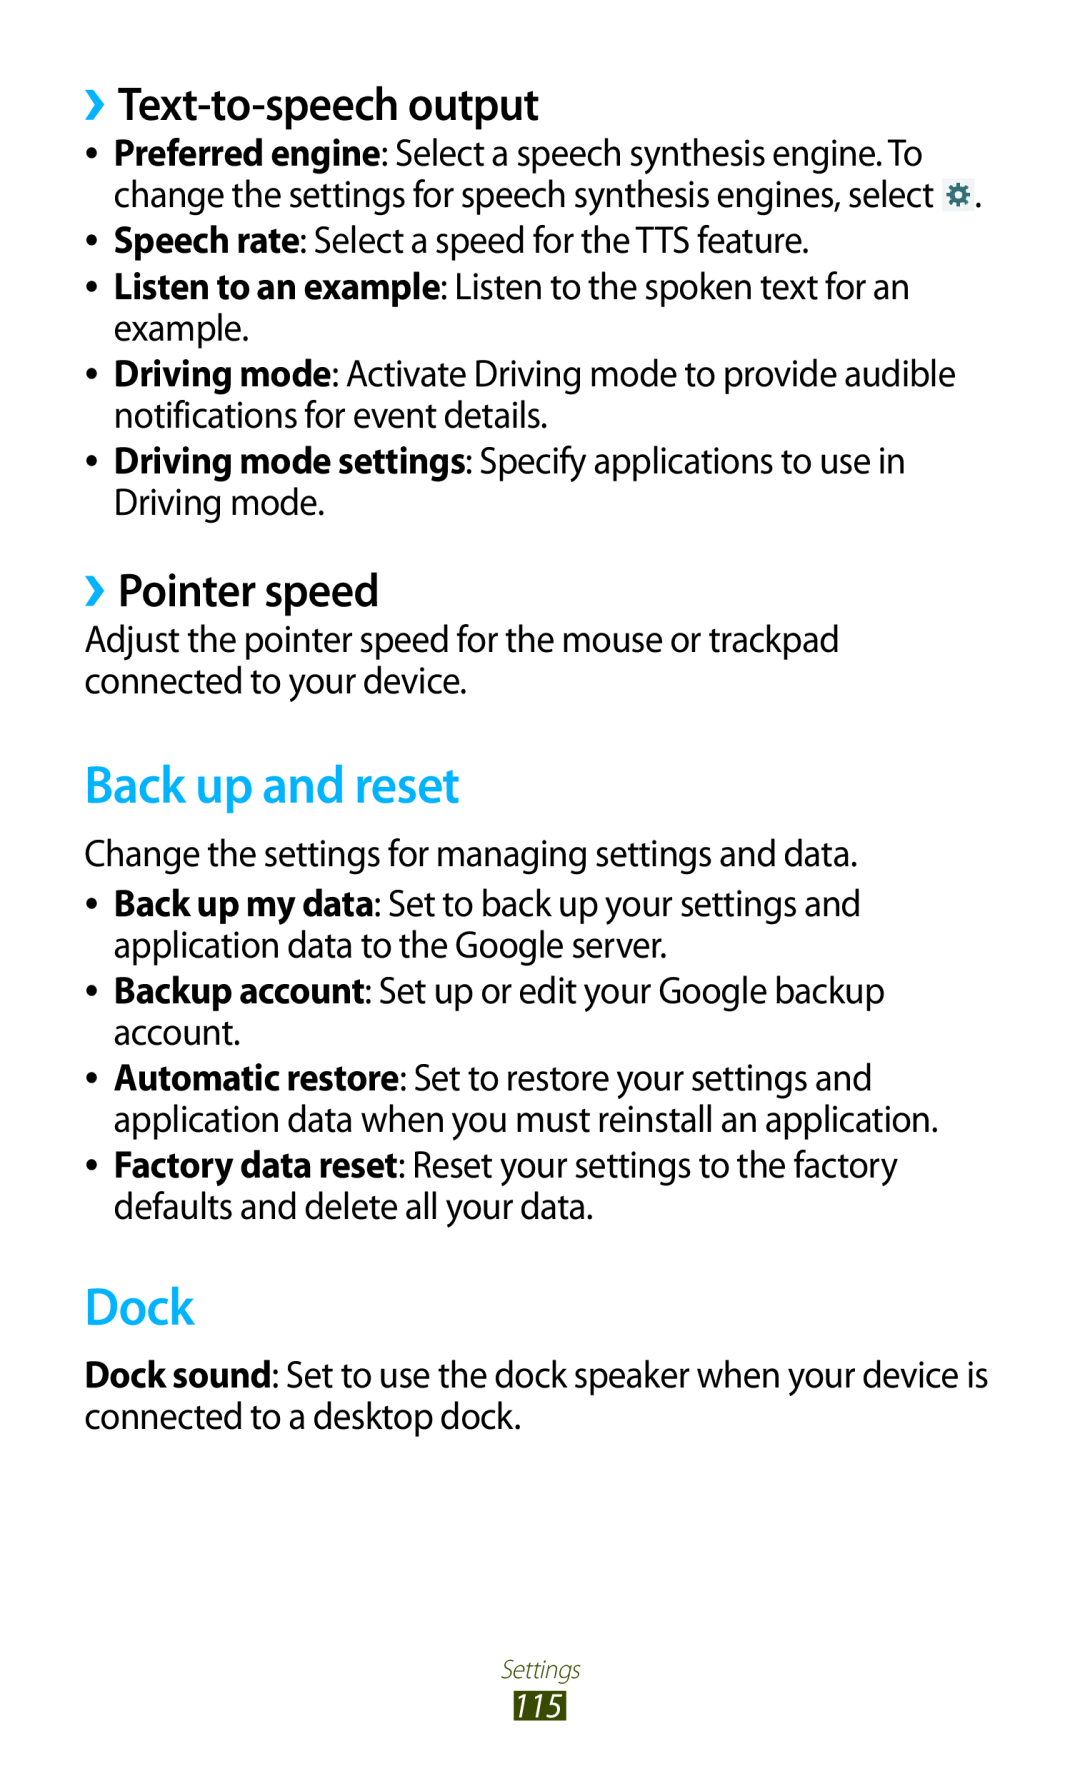 Samsung GT-P7500UWDGBL, GT-P7500UWEDBT, GT-P7500FKAATO Back up and reset, Dock, ››Text-to-speech output, ››Pointer speed 